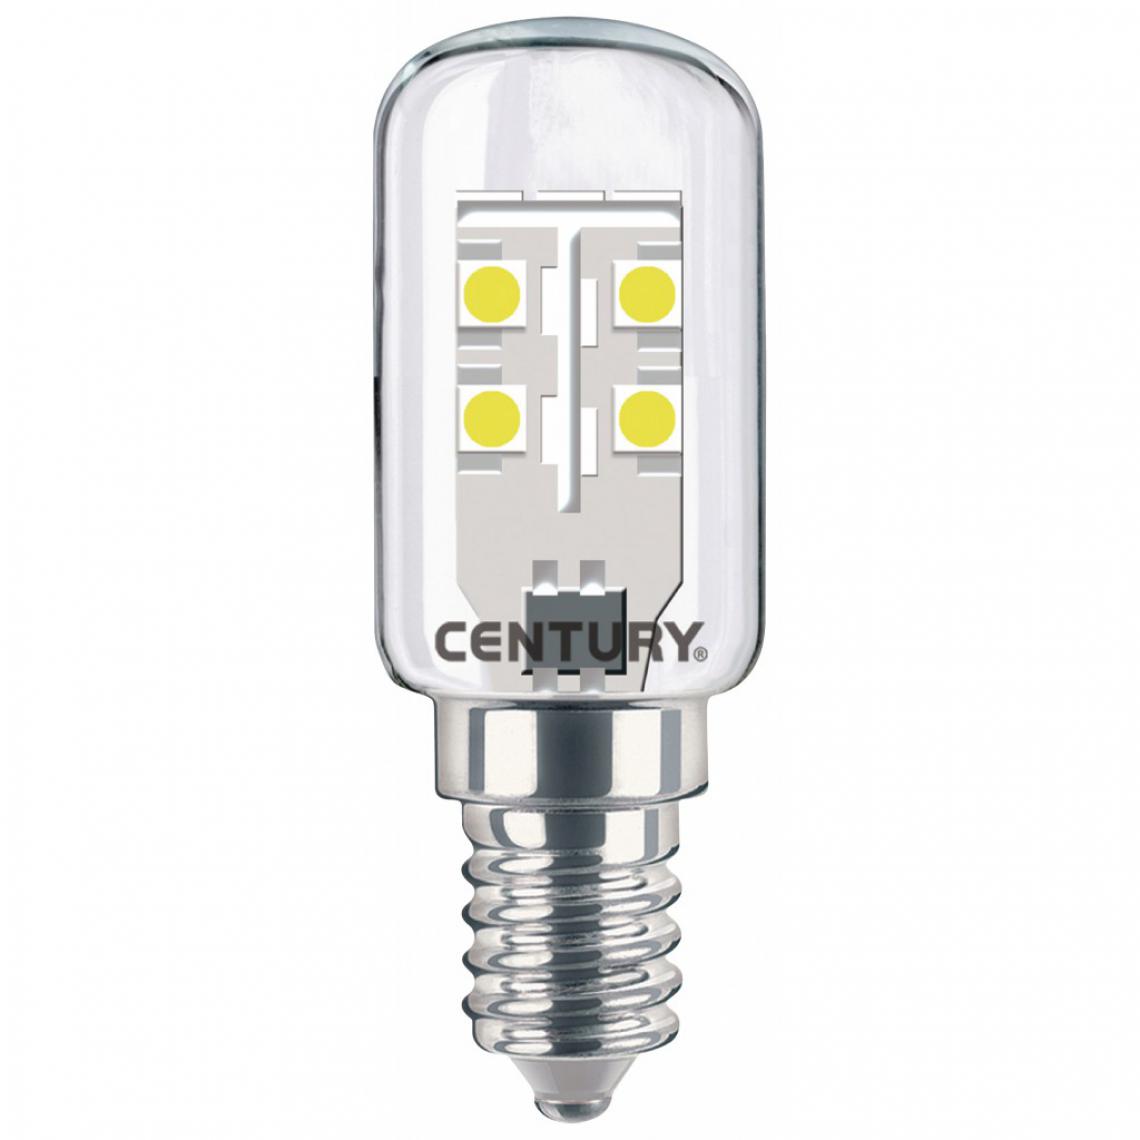 Alpexe - Ampoule LED E14 Capsule 1 W 130 lm 5000 K - Ampoules LED